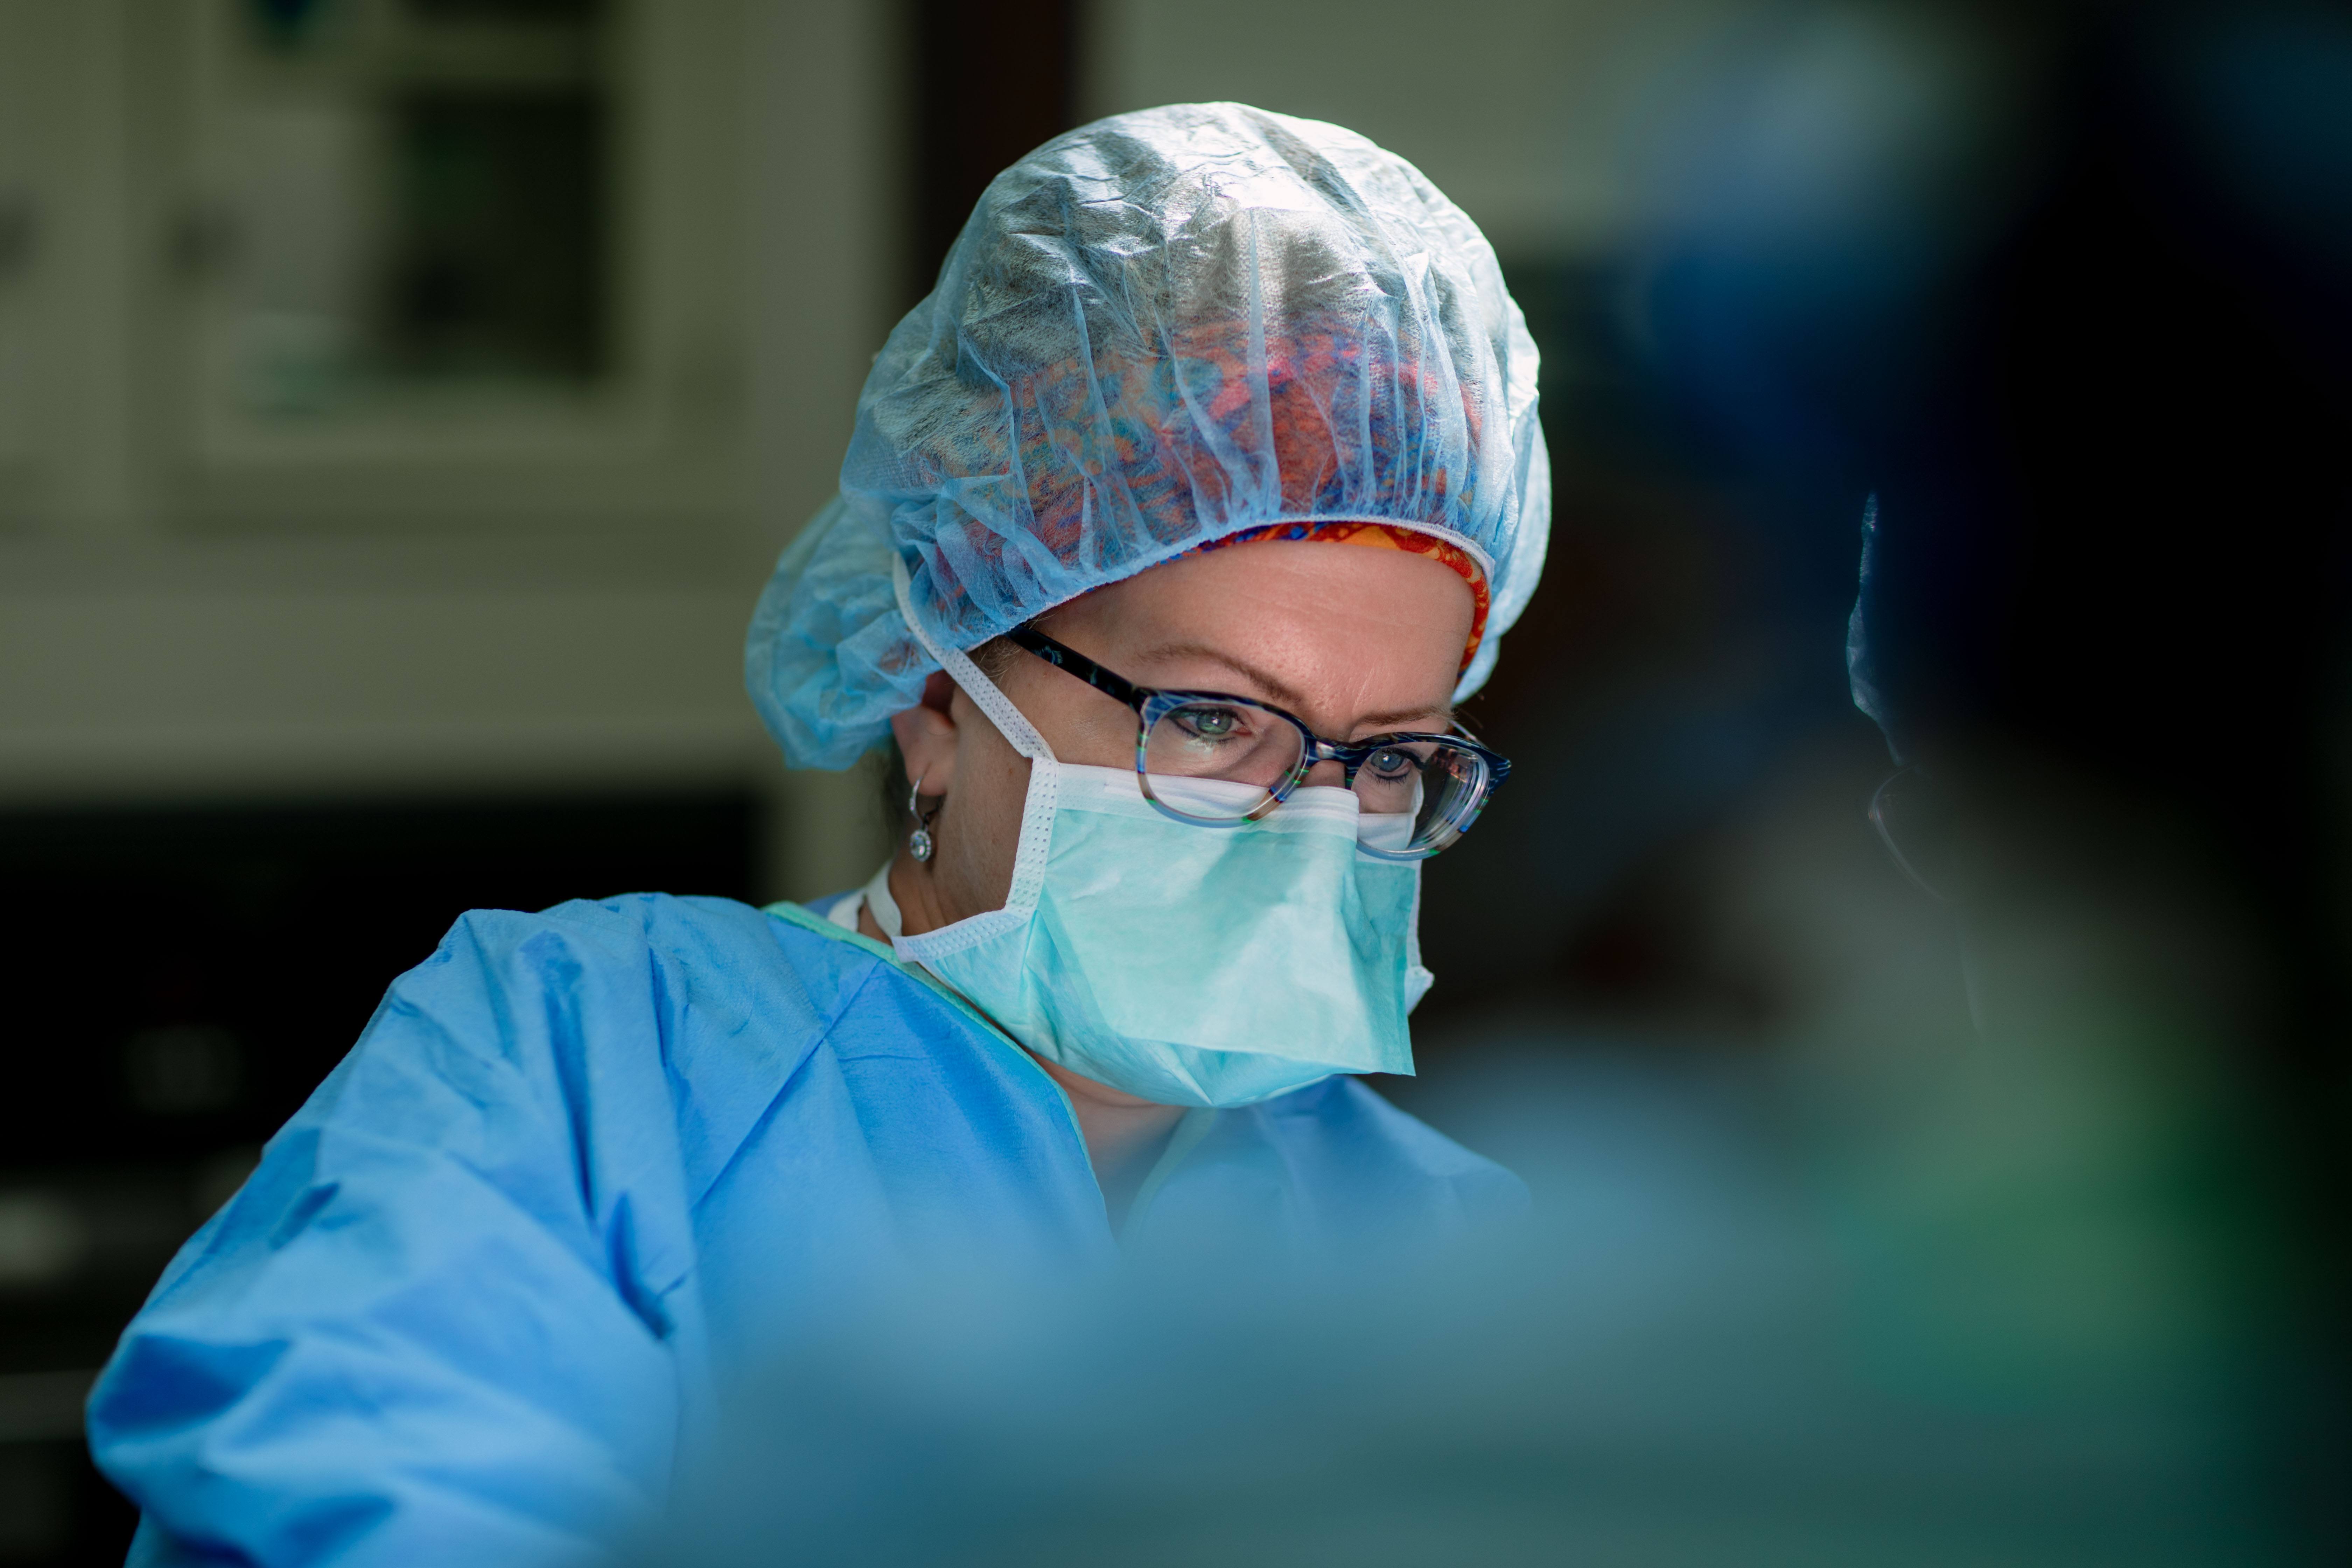 Breast surgeon Dr. Tina Hieken